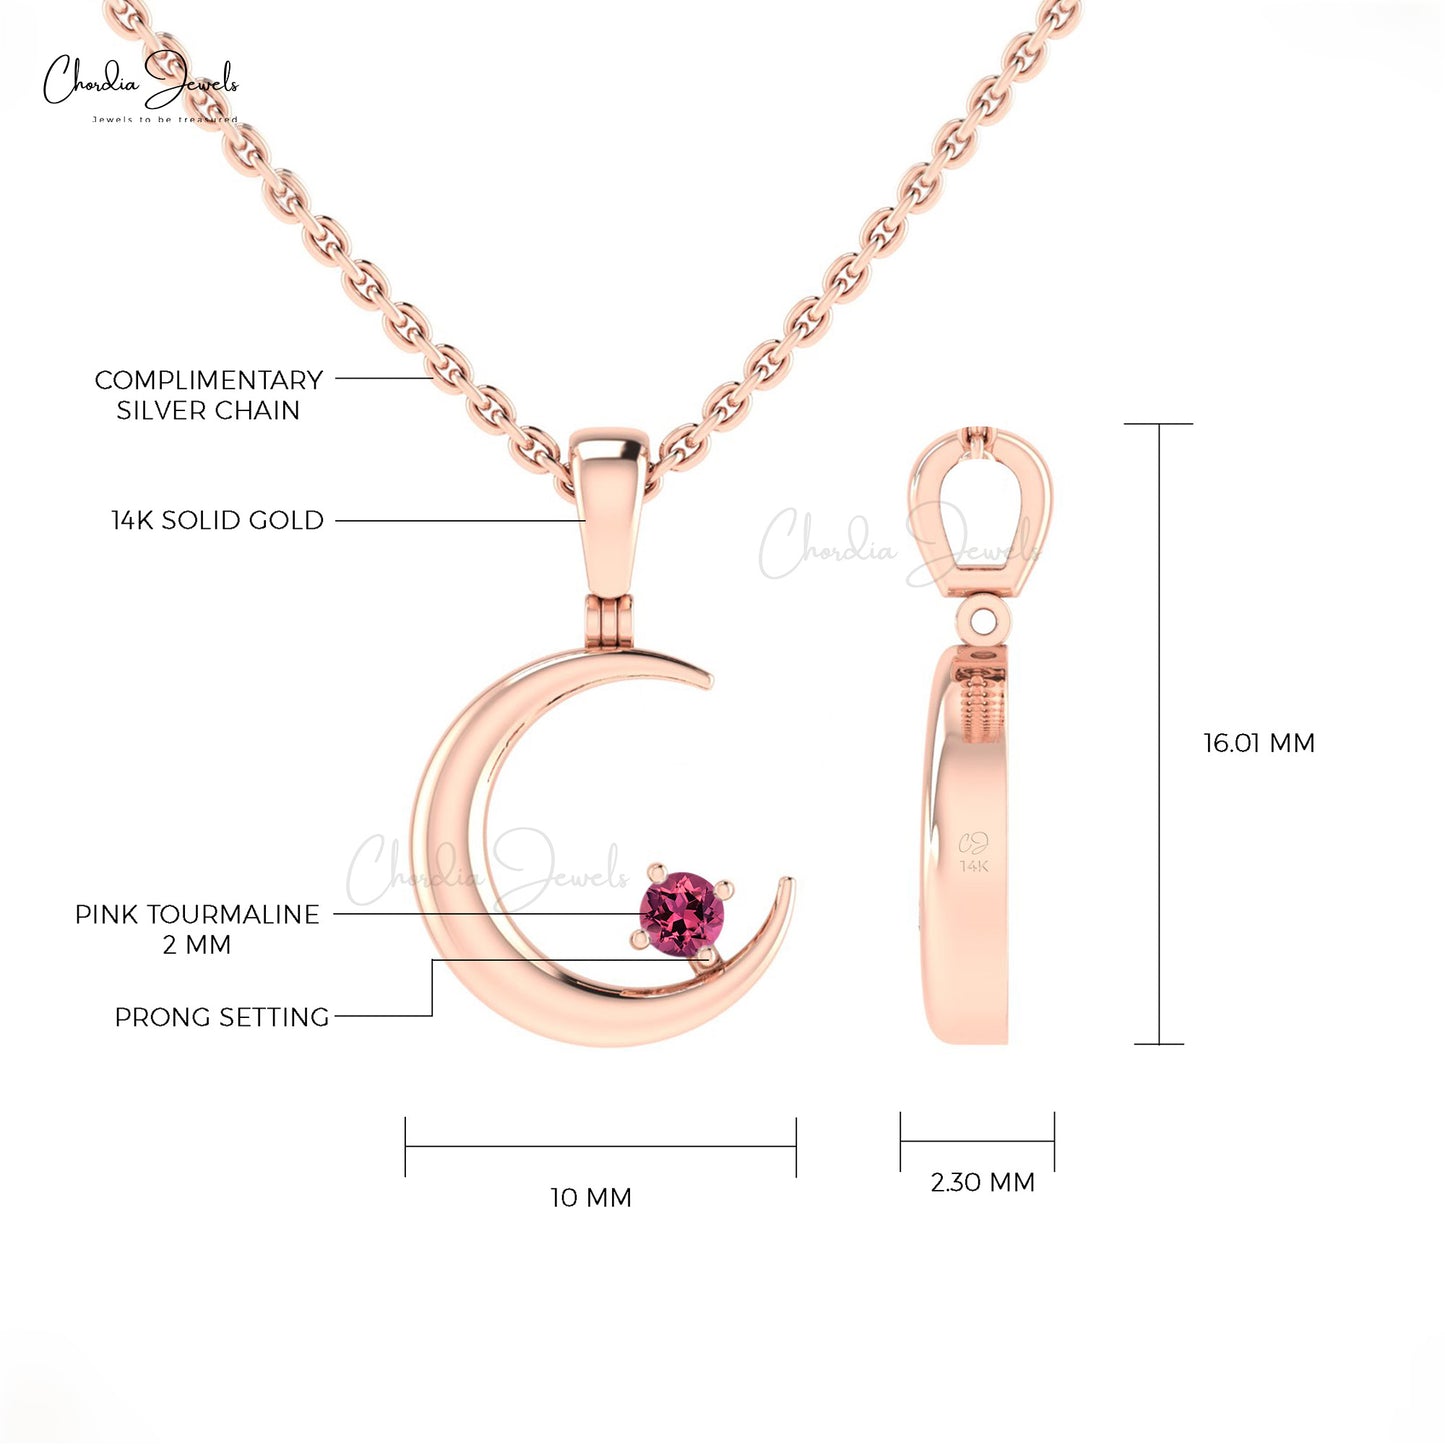 Genuine Pink Tourmaline Crescent Pendant 2mm Round Cut Gemstone Pendant 14k Solid Gold Pendant For October Birthstone